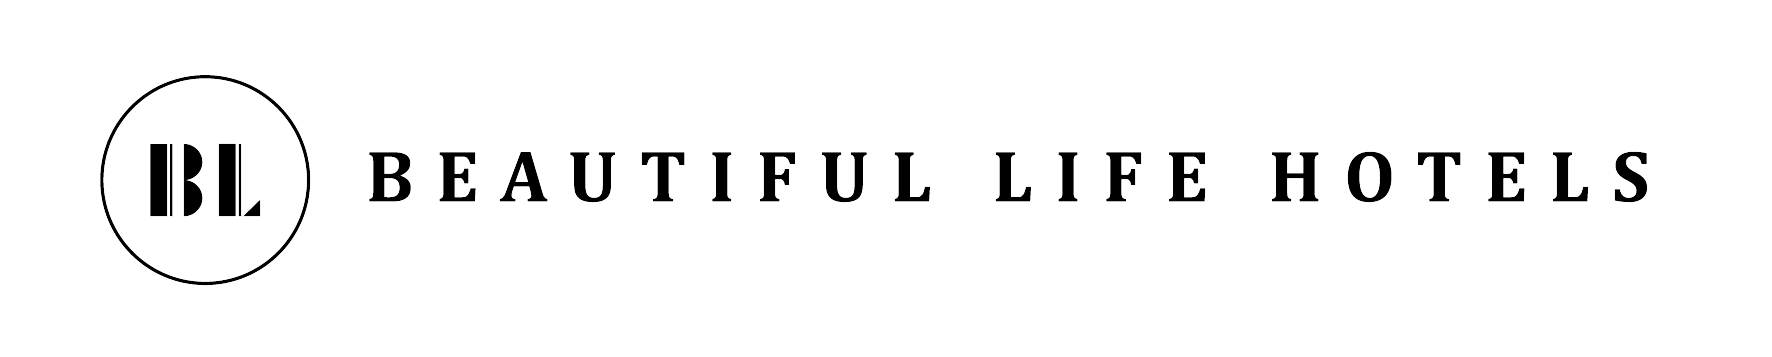 Beautiful Life Hotels logo